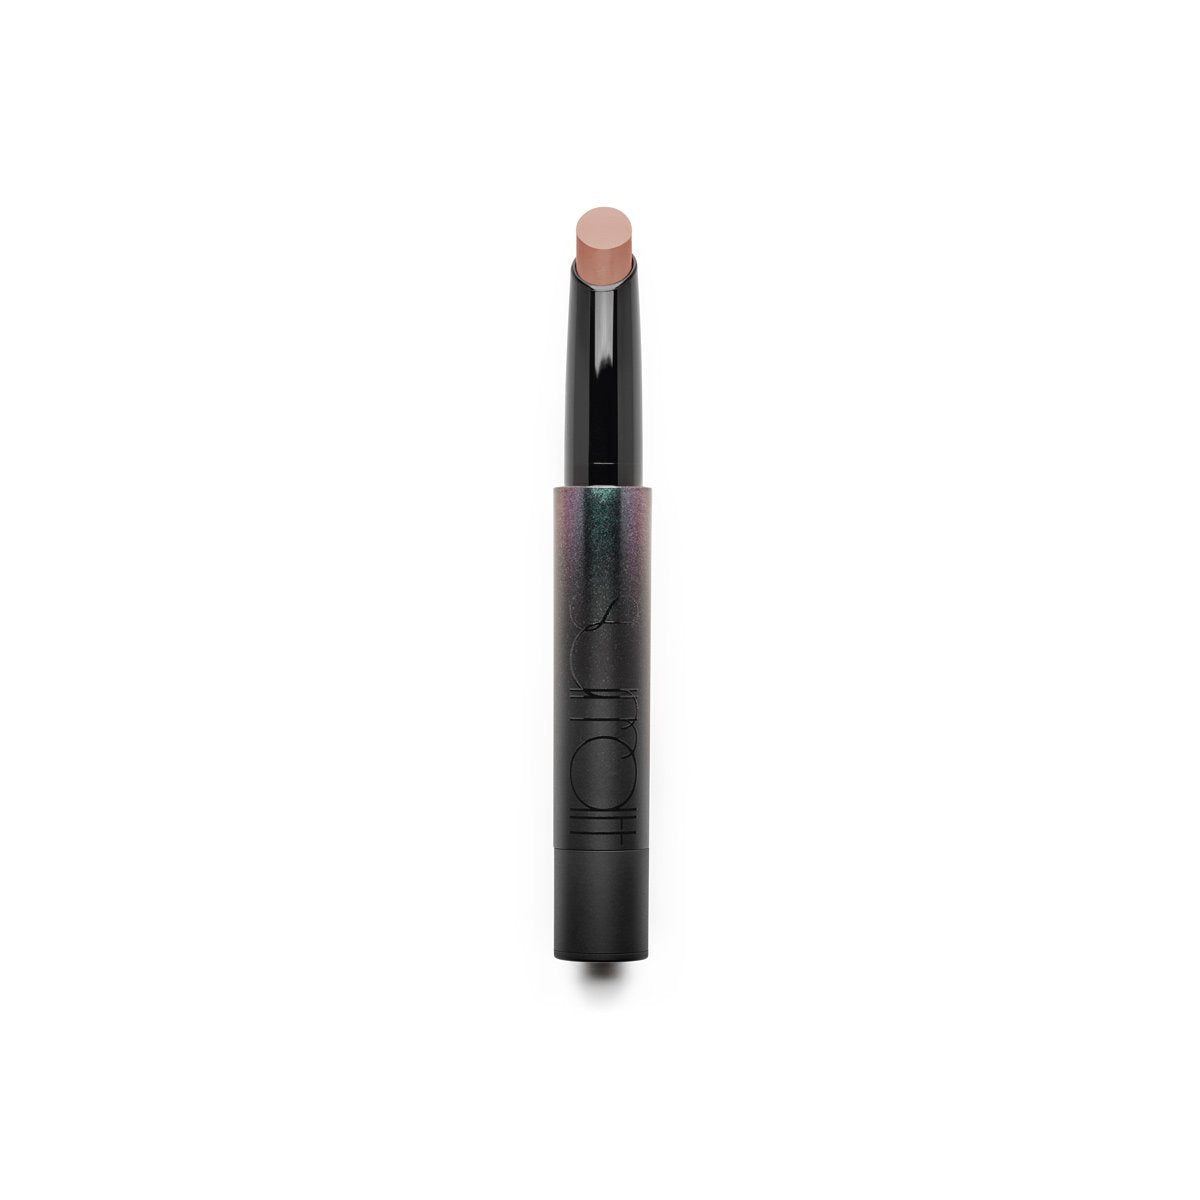 NU DE SOLEIL - PEACHY BEIGE - creamy moisturizing lipstick lip balm in peachy beige shade